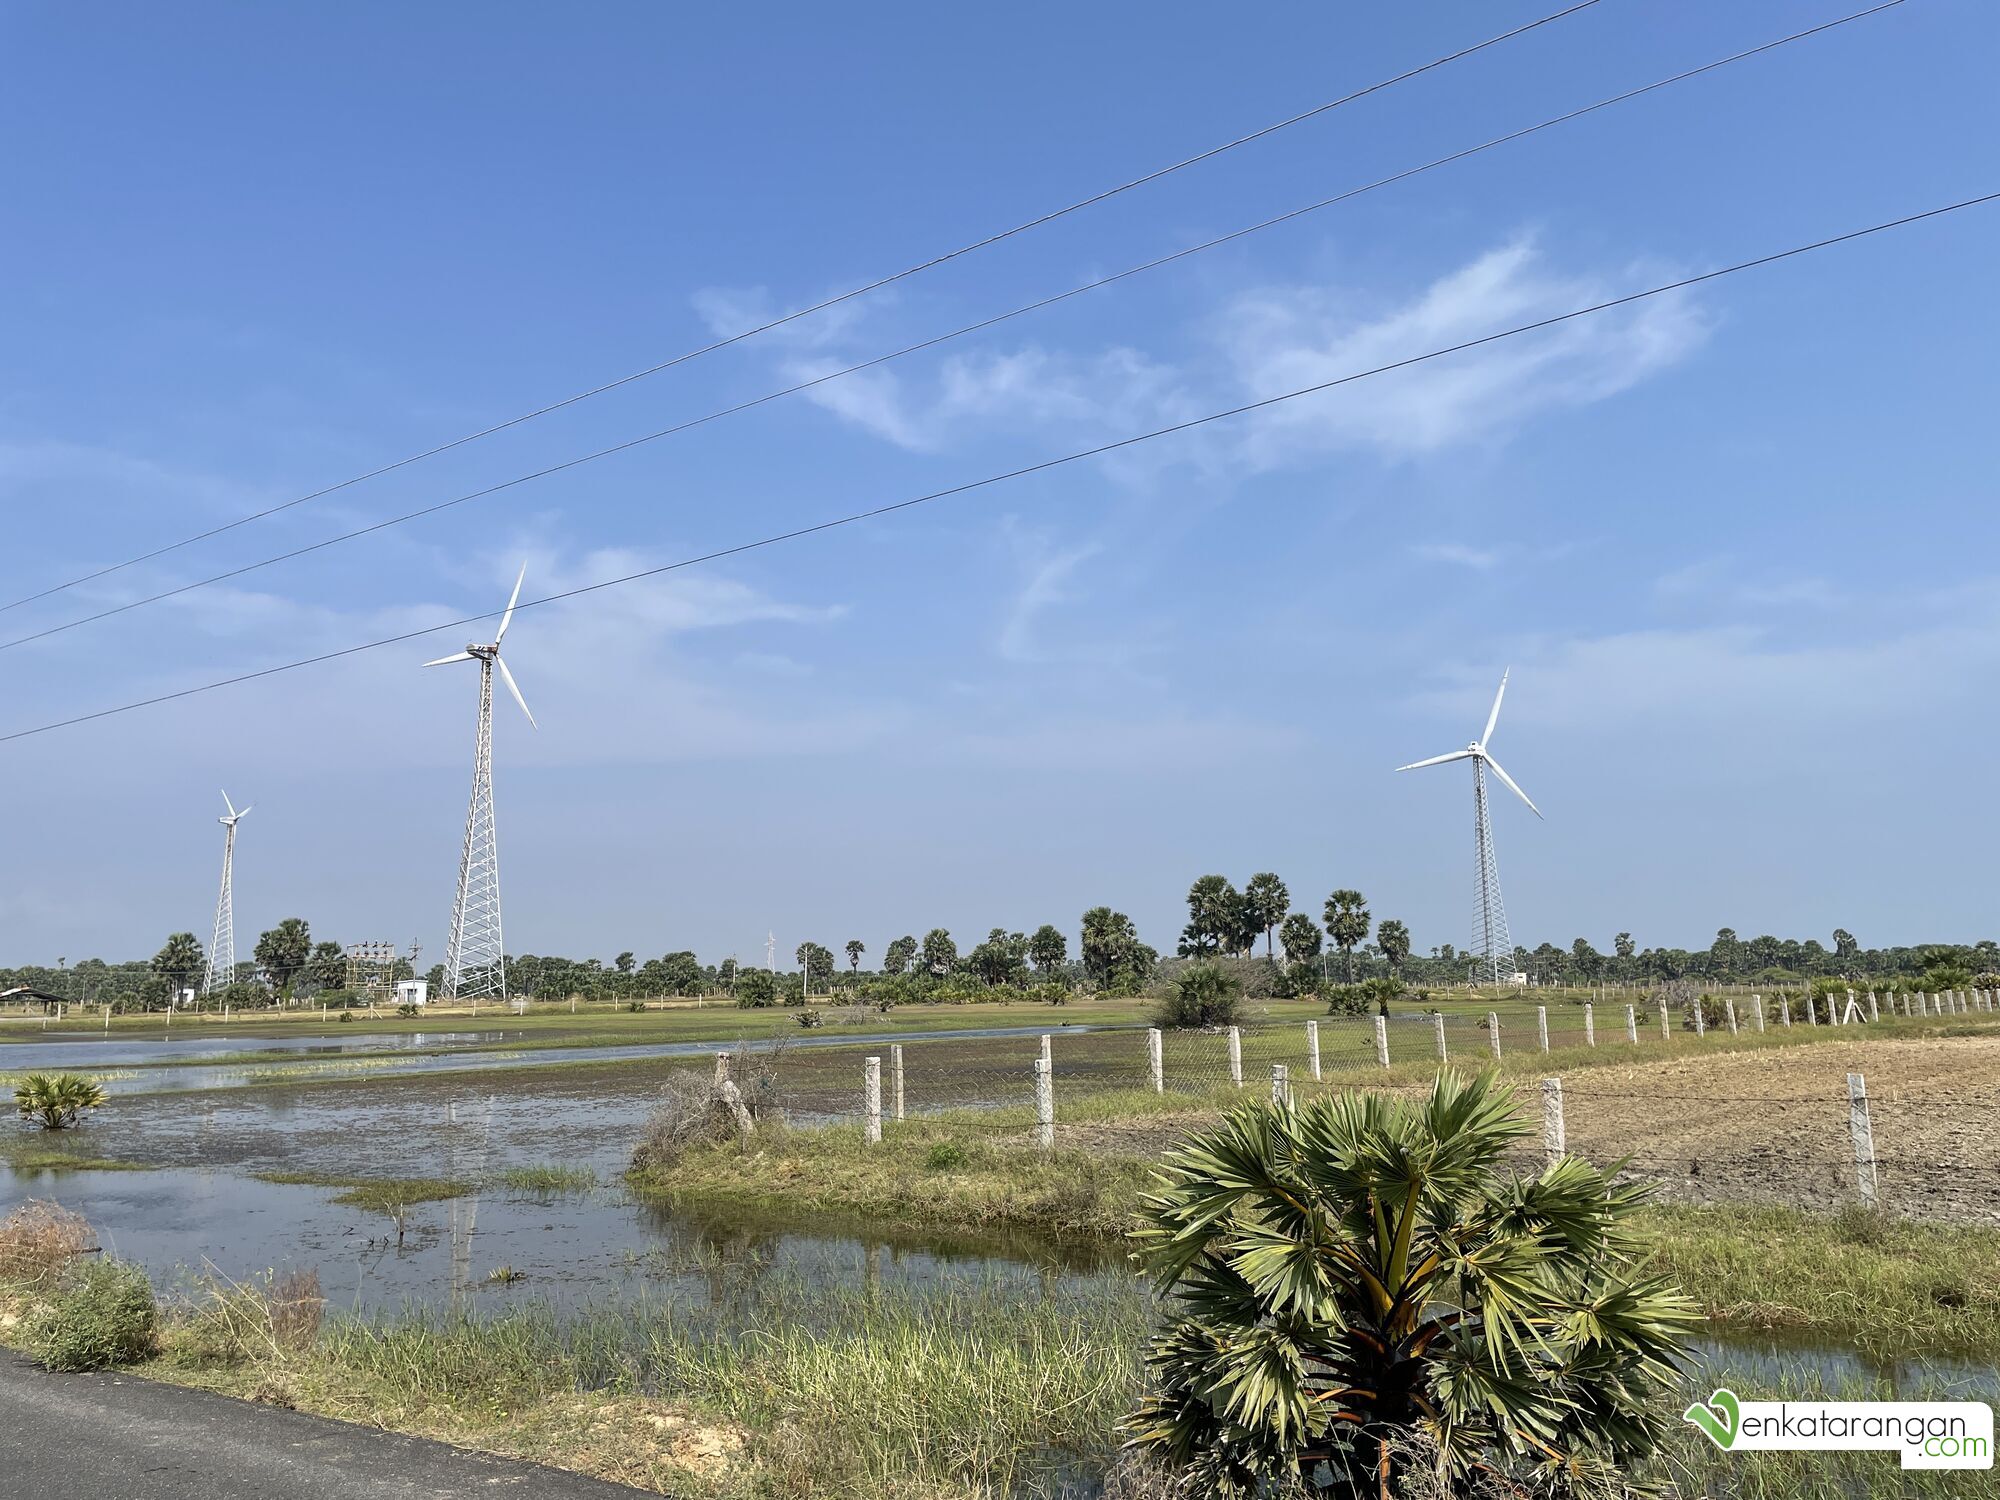 Windmills seen in the Farm lands - Rameswaram to Thoothukudi Road towards Thiruppullani